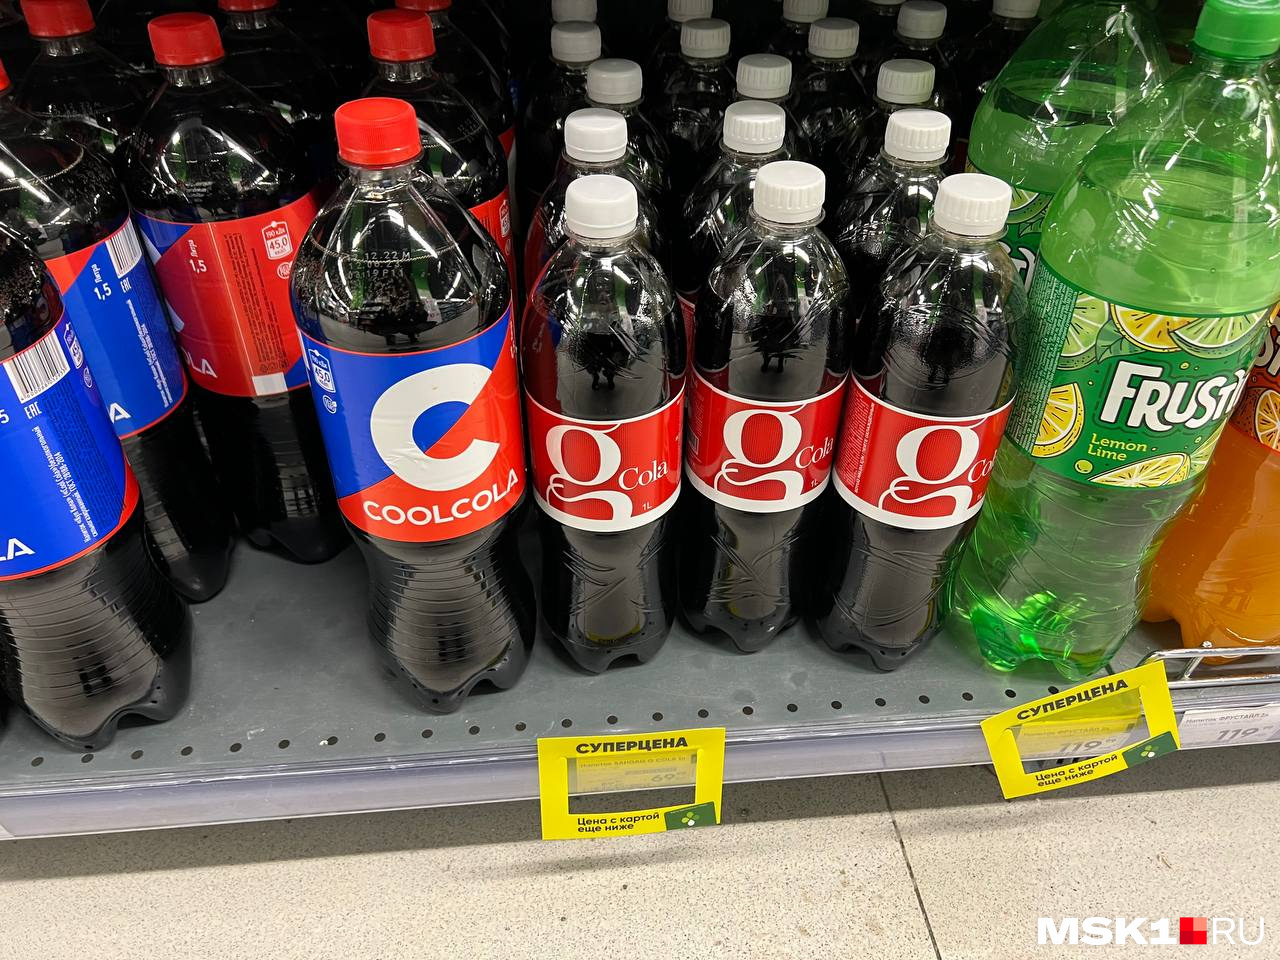 G Cola